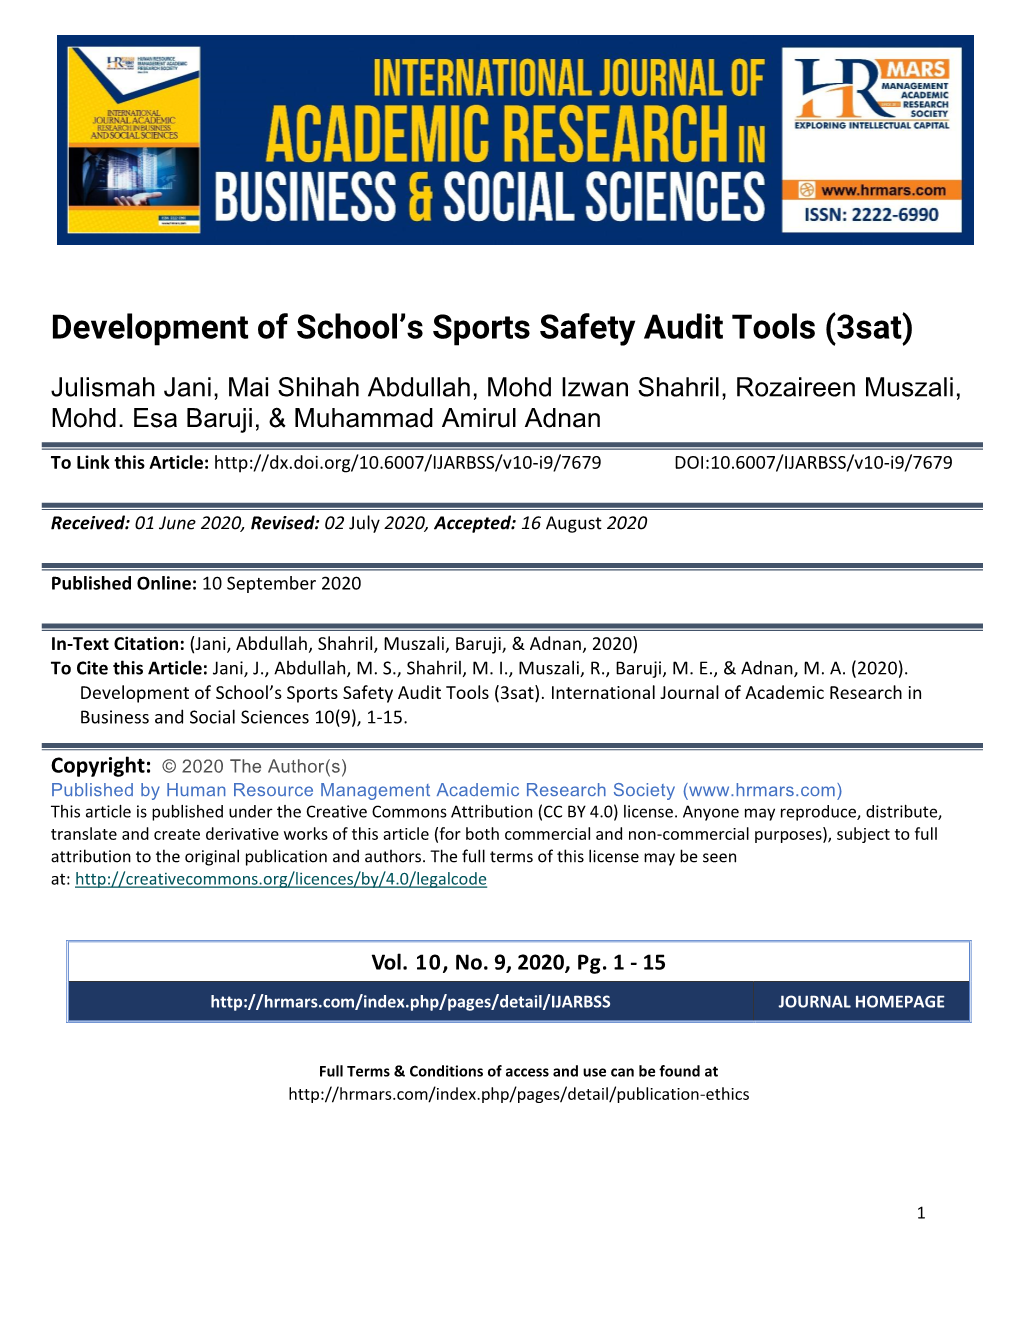 Development of School's Sports Safety Audit Tools (3Sat)